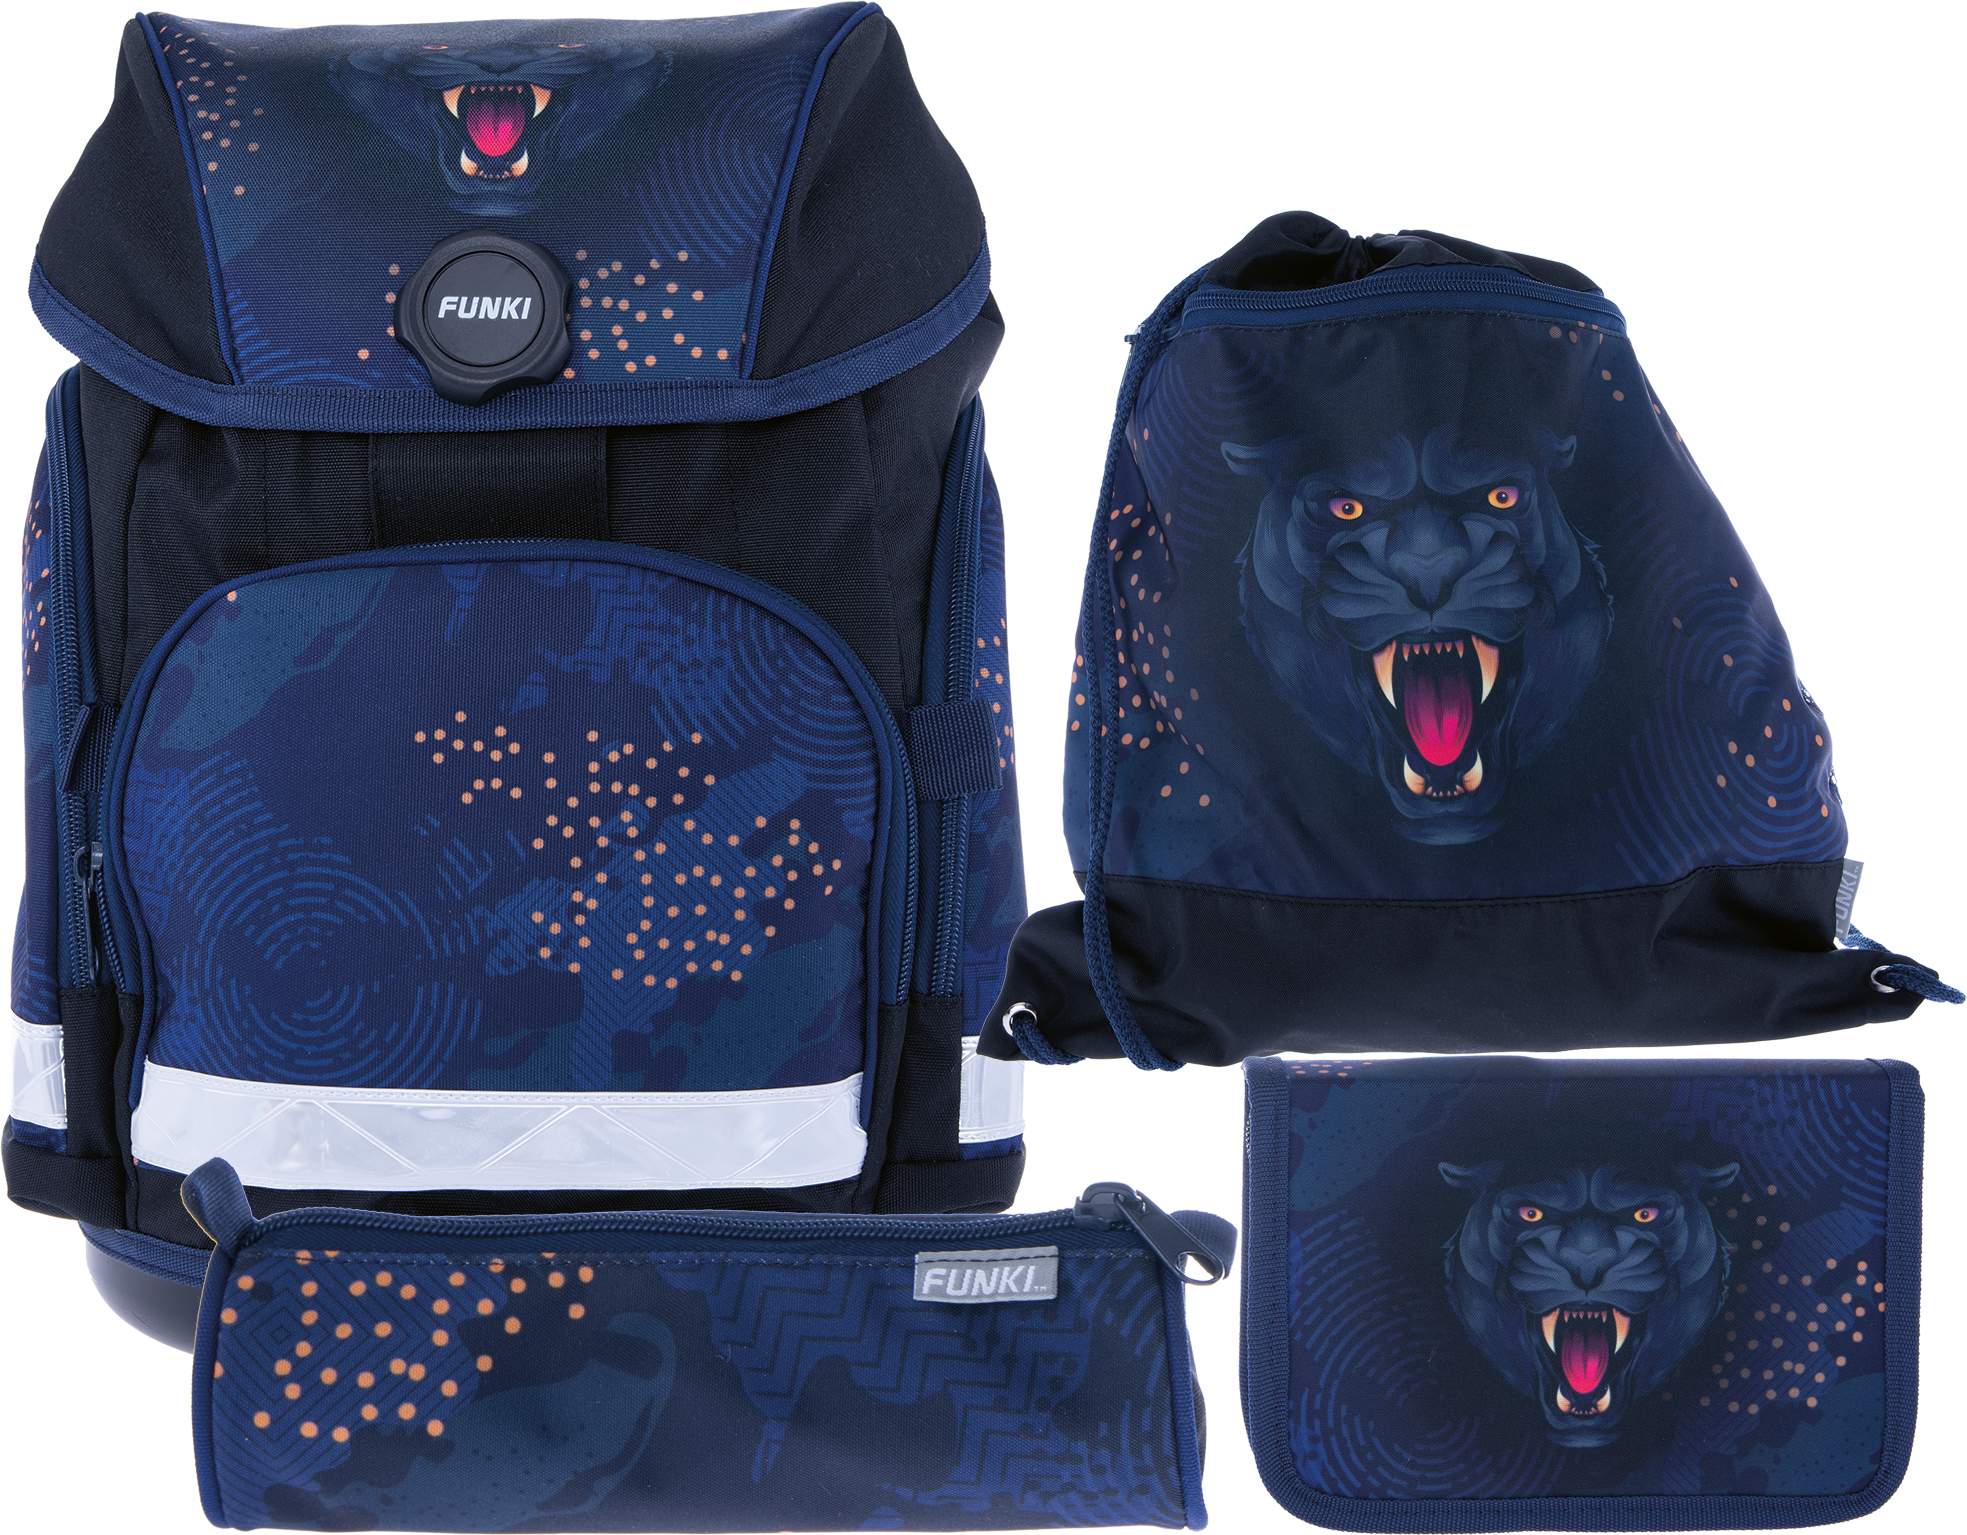 FUNKI Joy-Bag Set Panther 6011.520 multicolor 4 pcs.